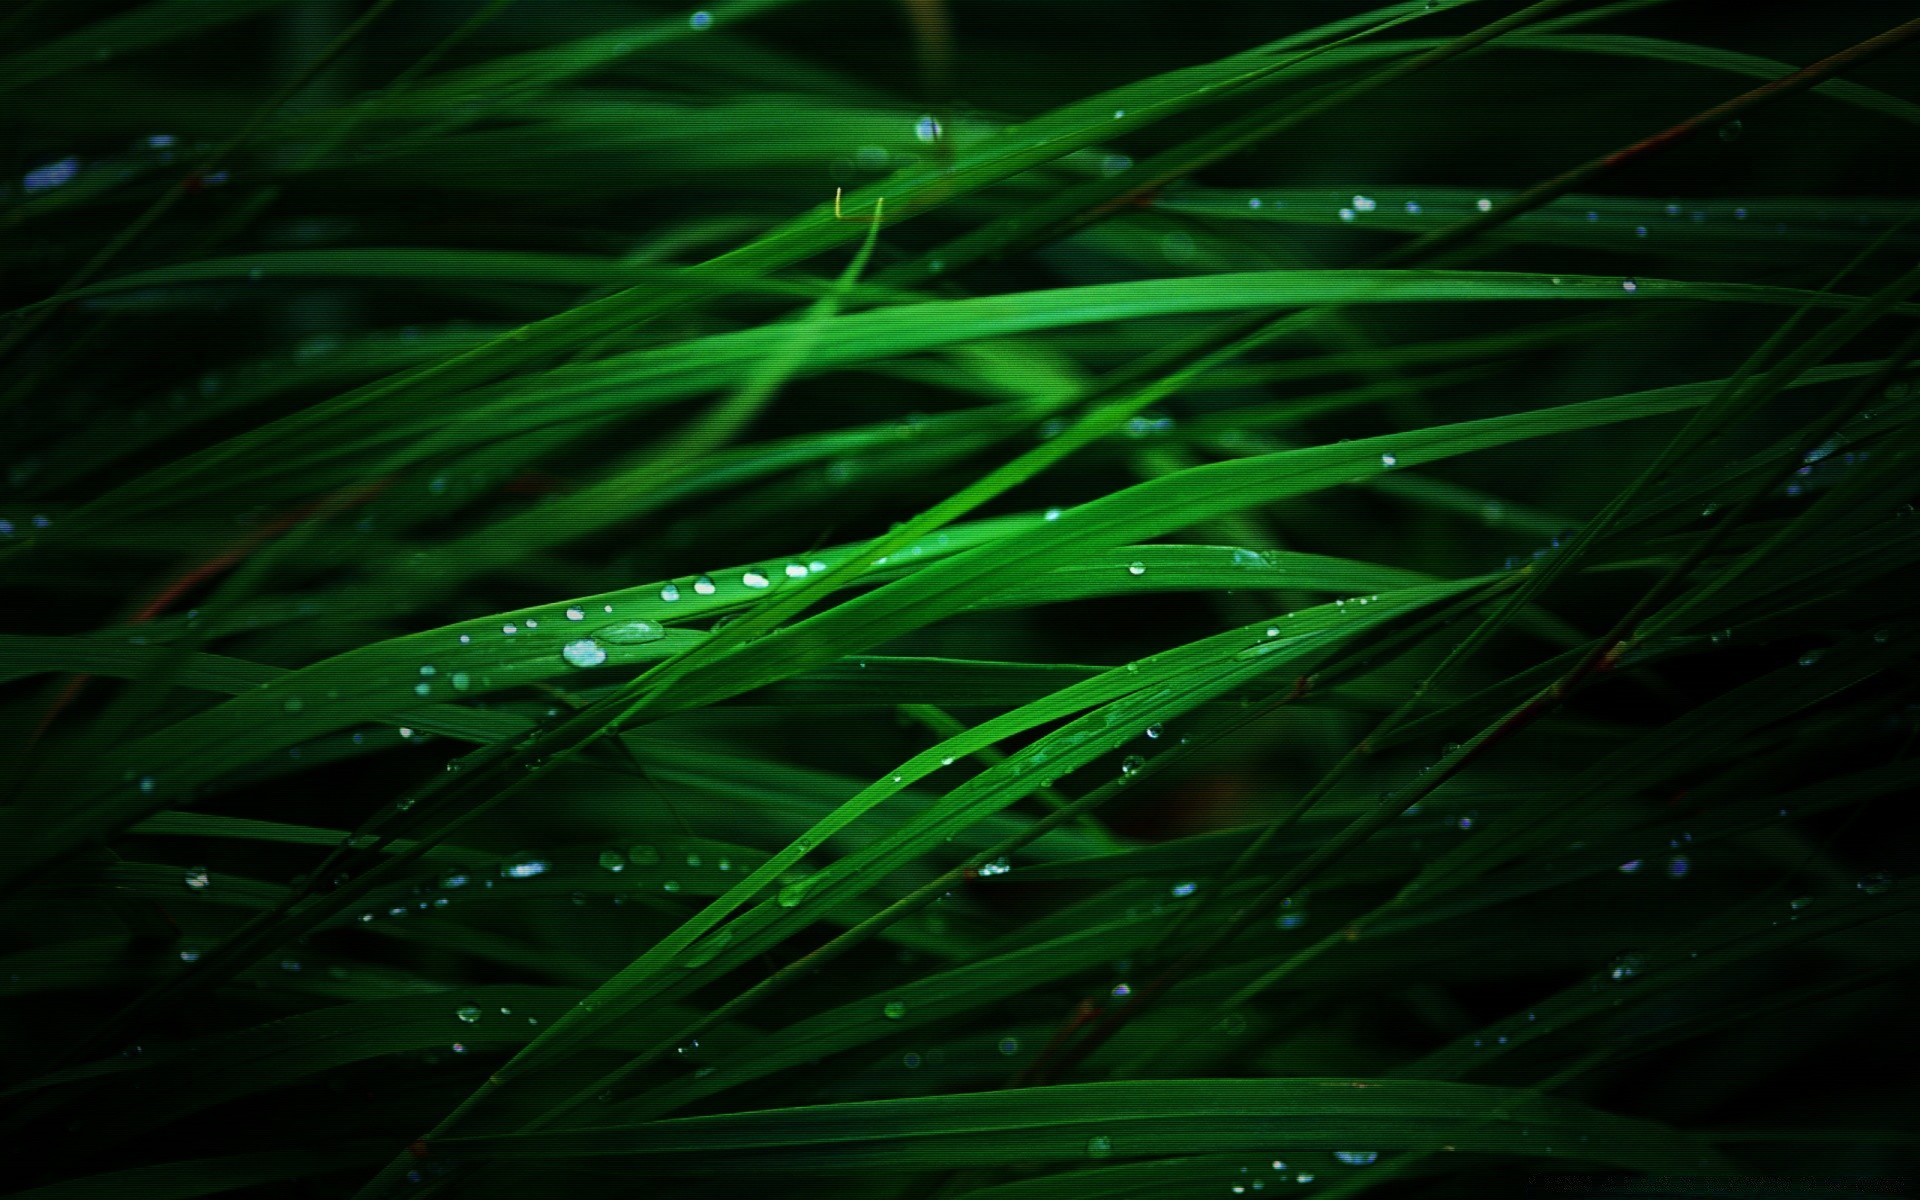 macro flora leaf growth dew grass nature lush rain lawn garden blade drop environment color freshness wet droplet desktop raindrop